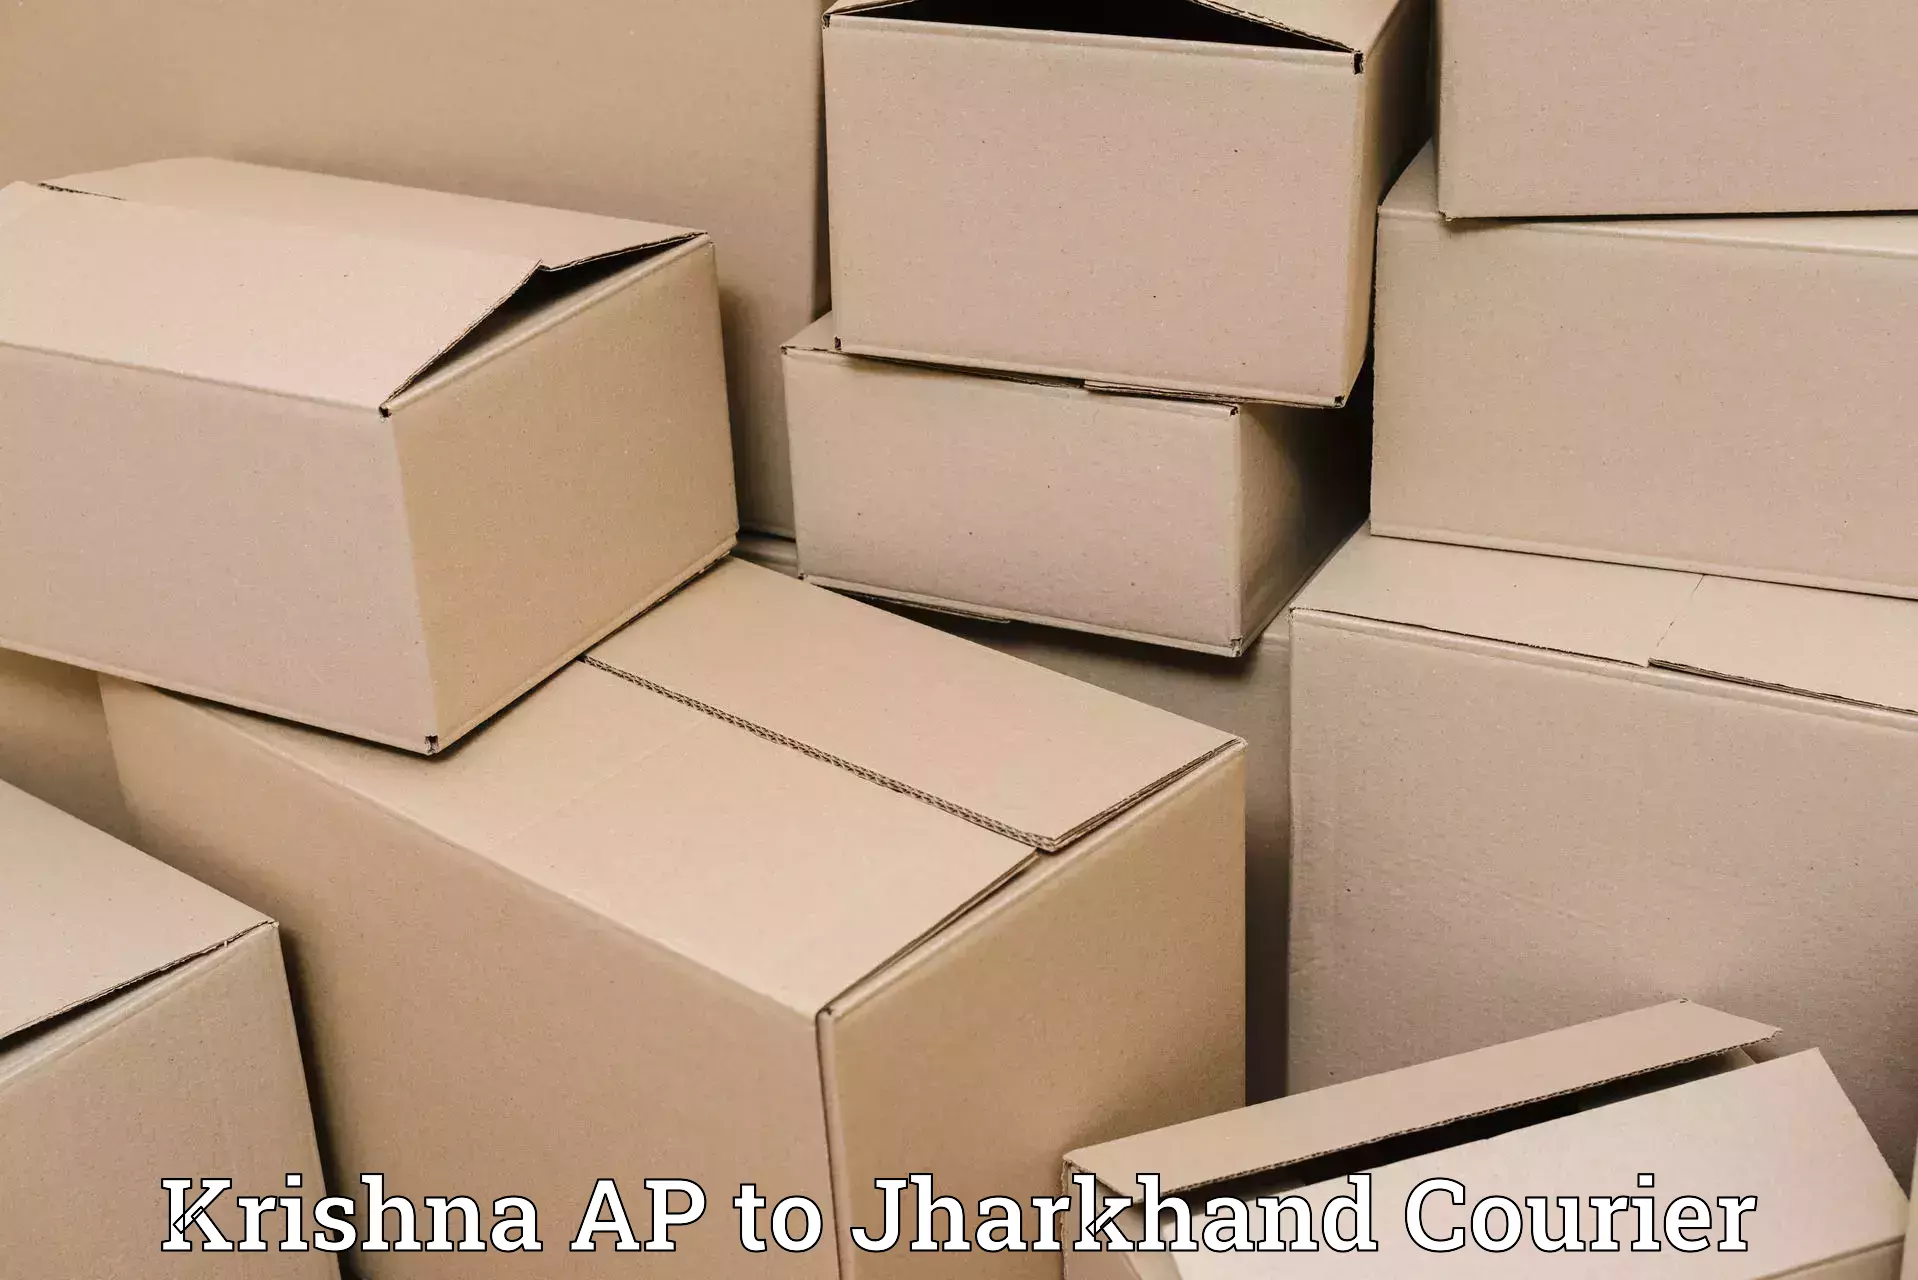 Urgent courier needs Krishna AP to Jamshedpur